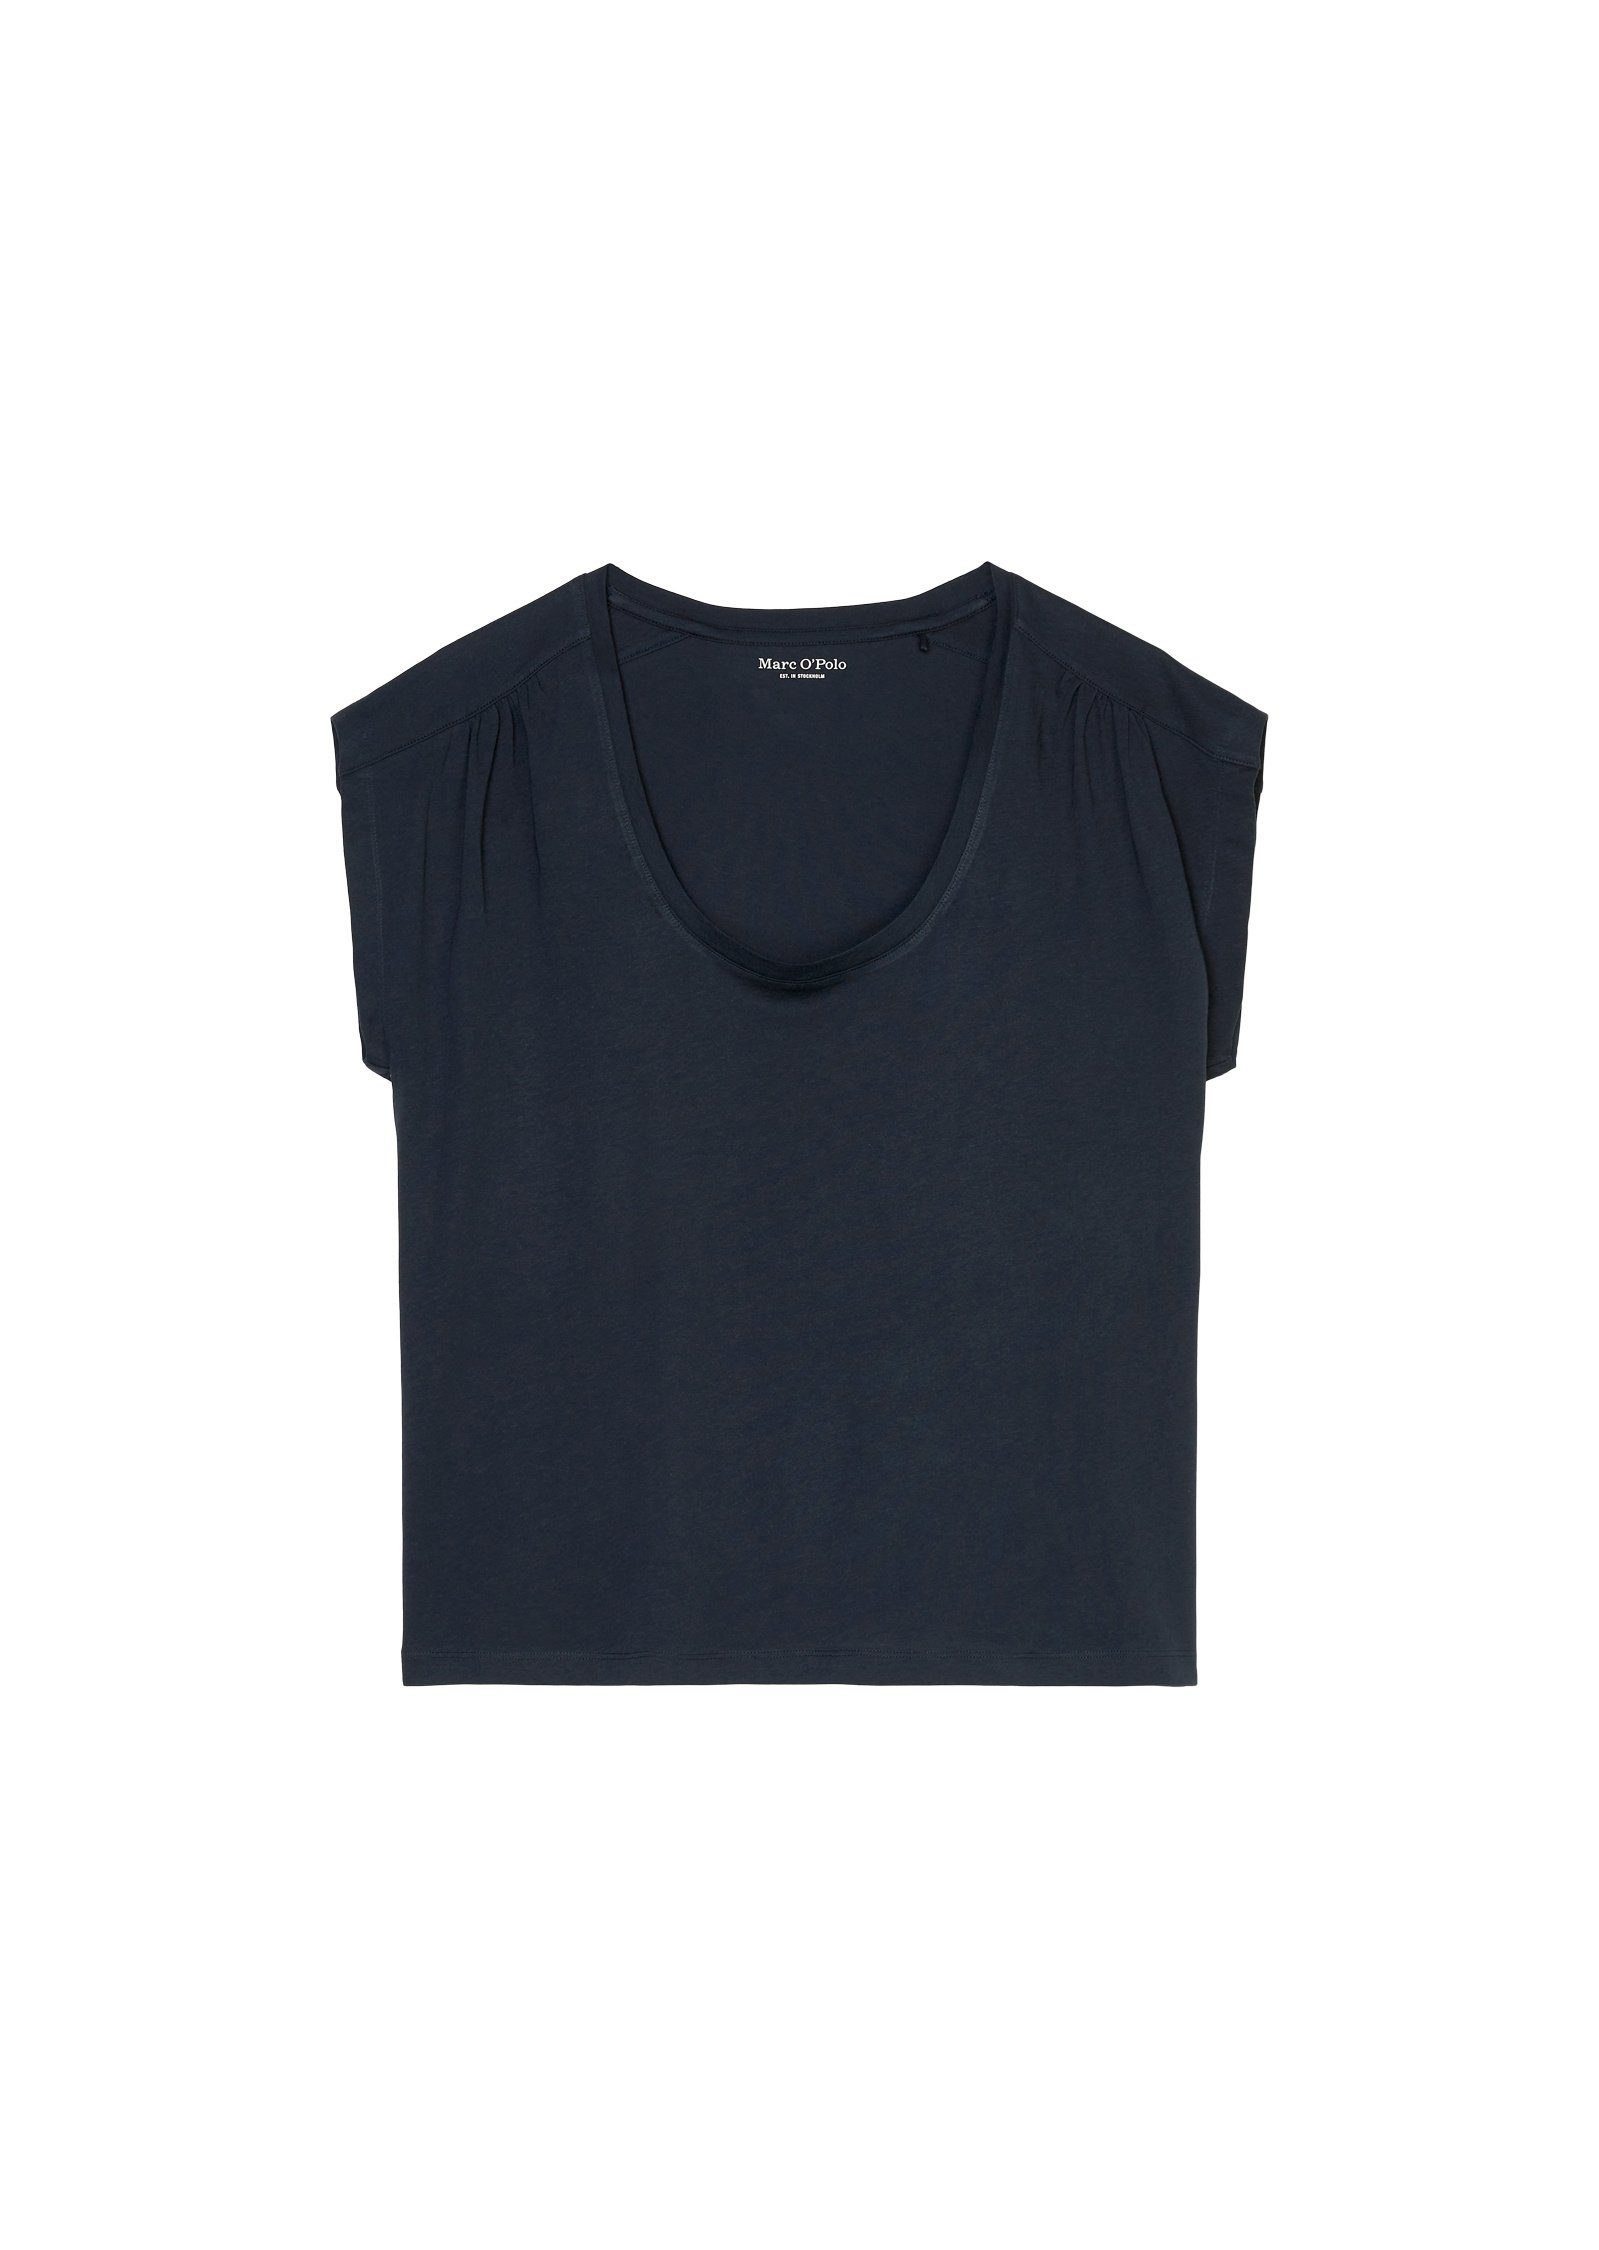 Marc O'Polo leichtem Single Jersey blau aus T-Shirt